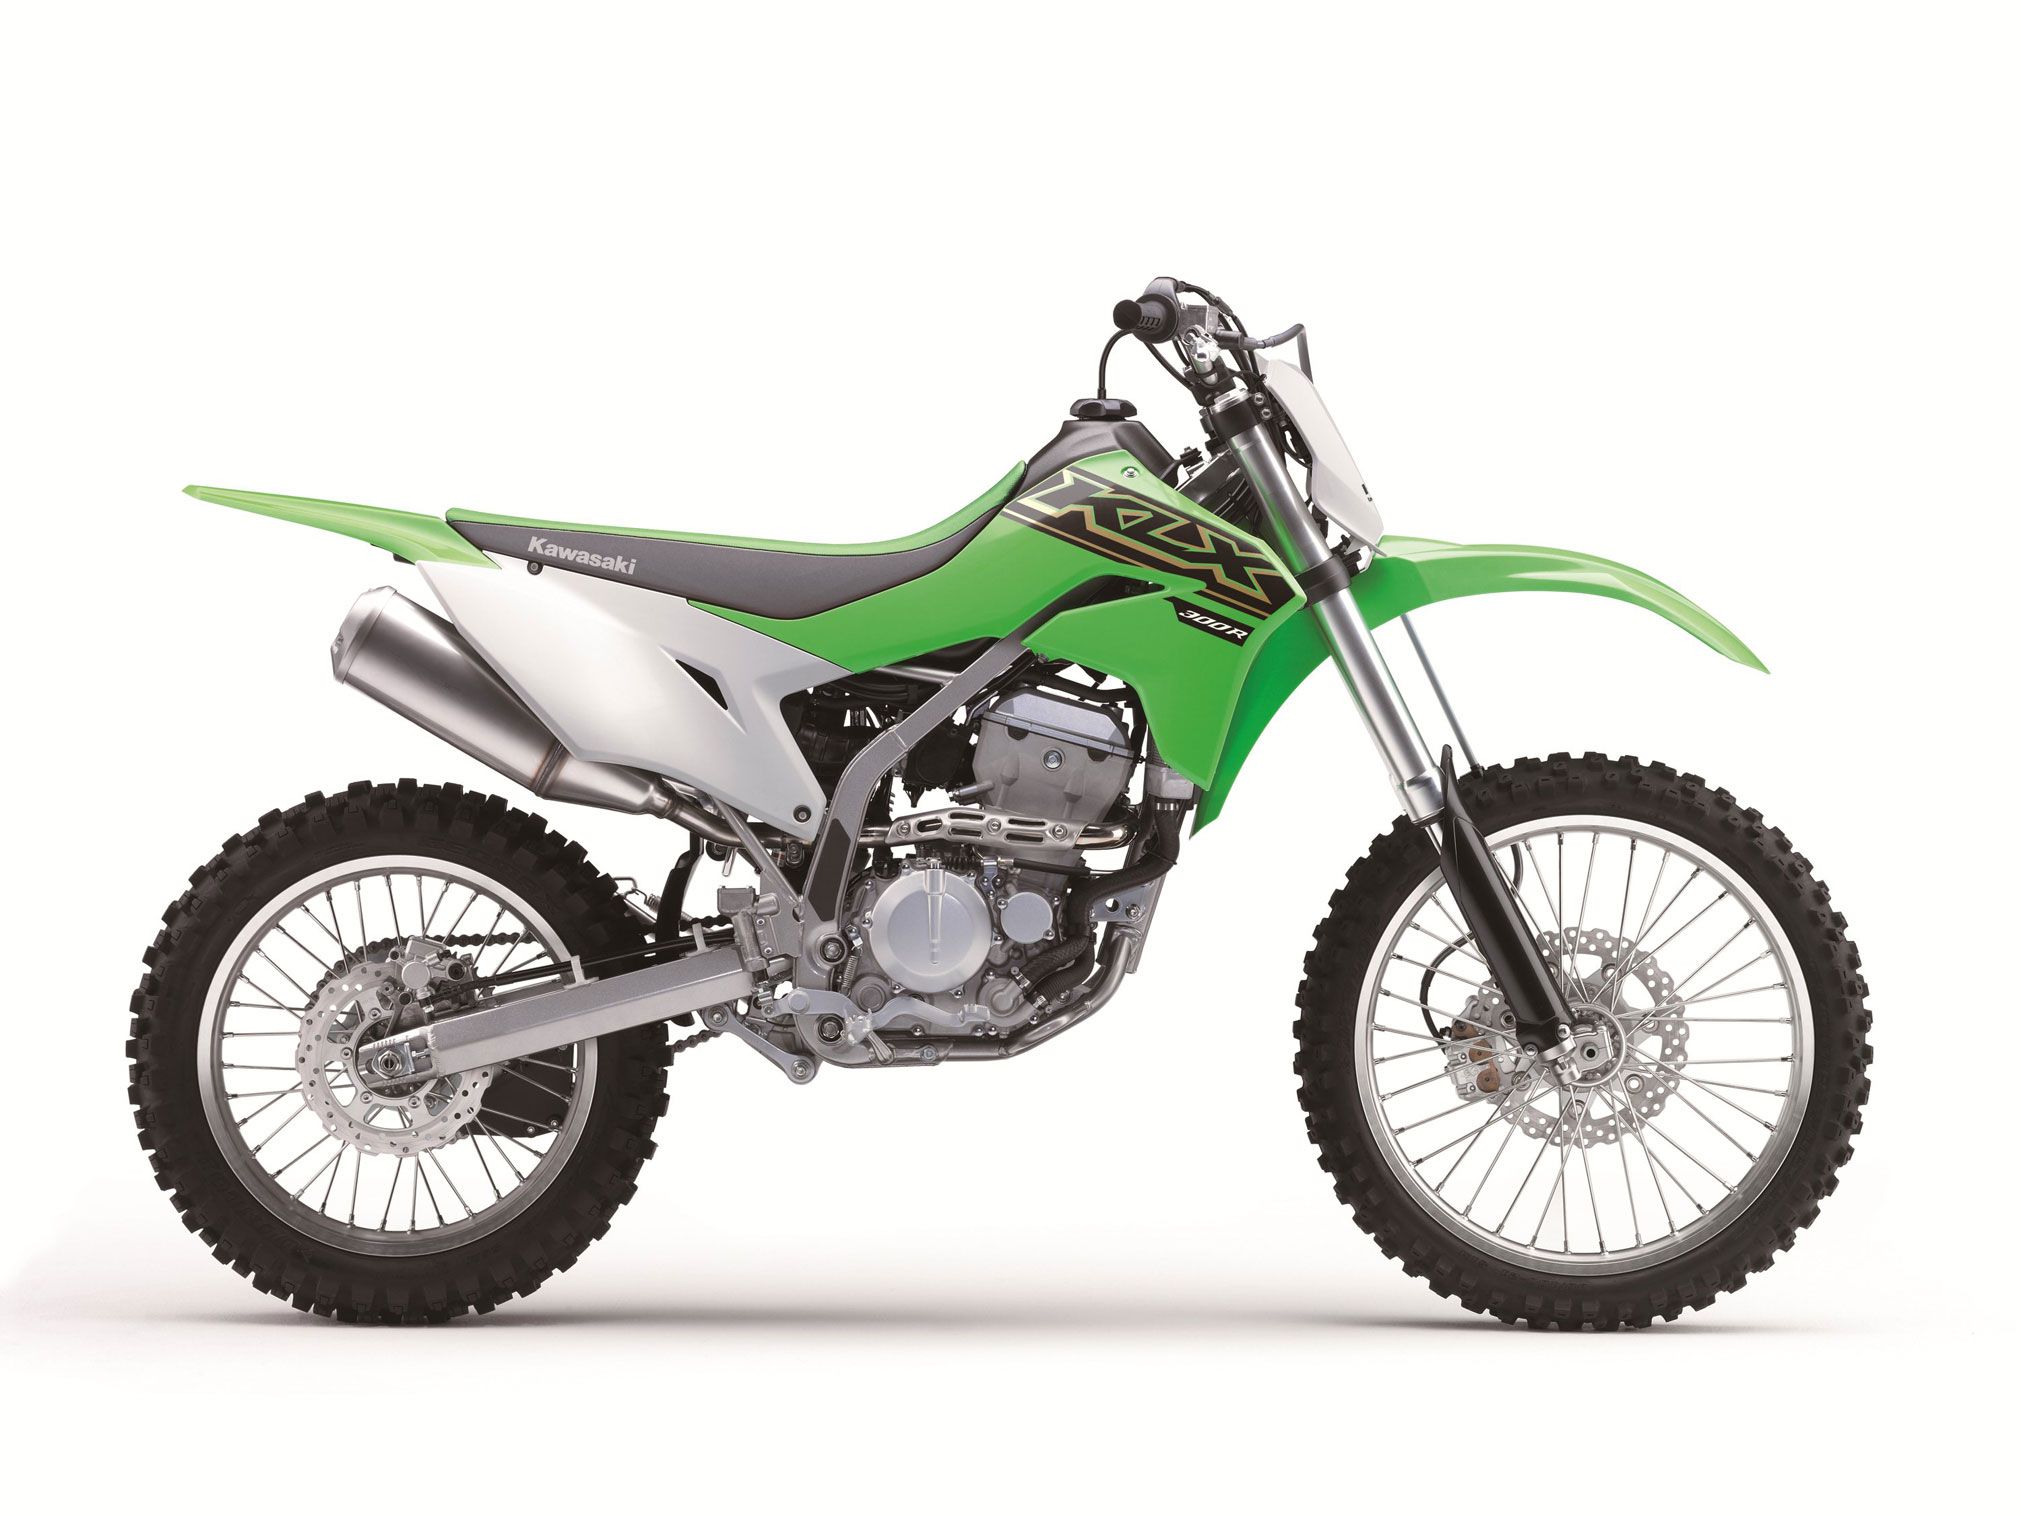 2021 Kawasaki KLX300R Guide  Total Motorcycle